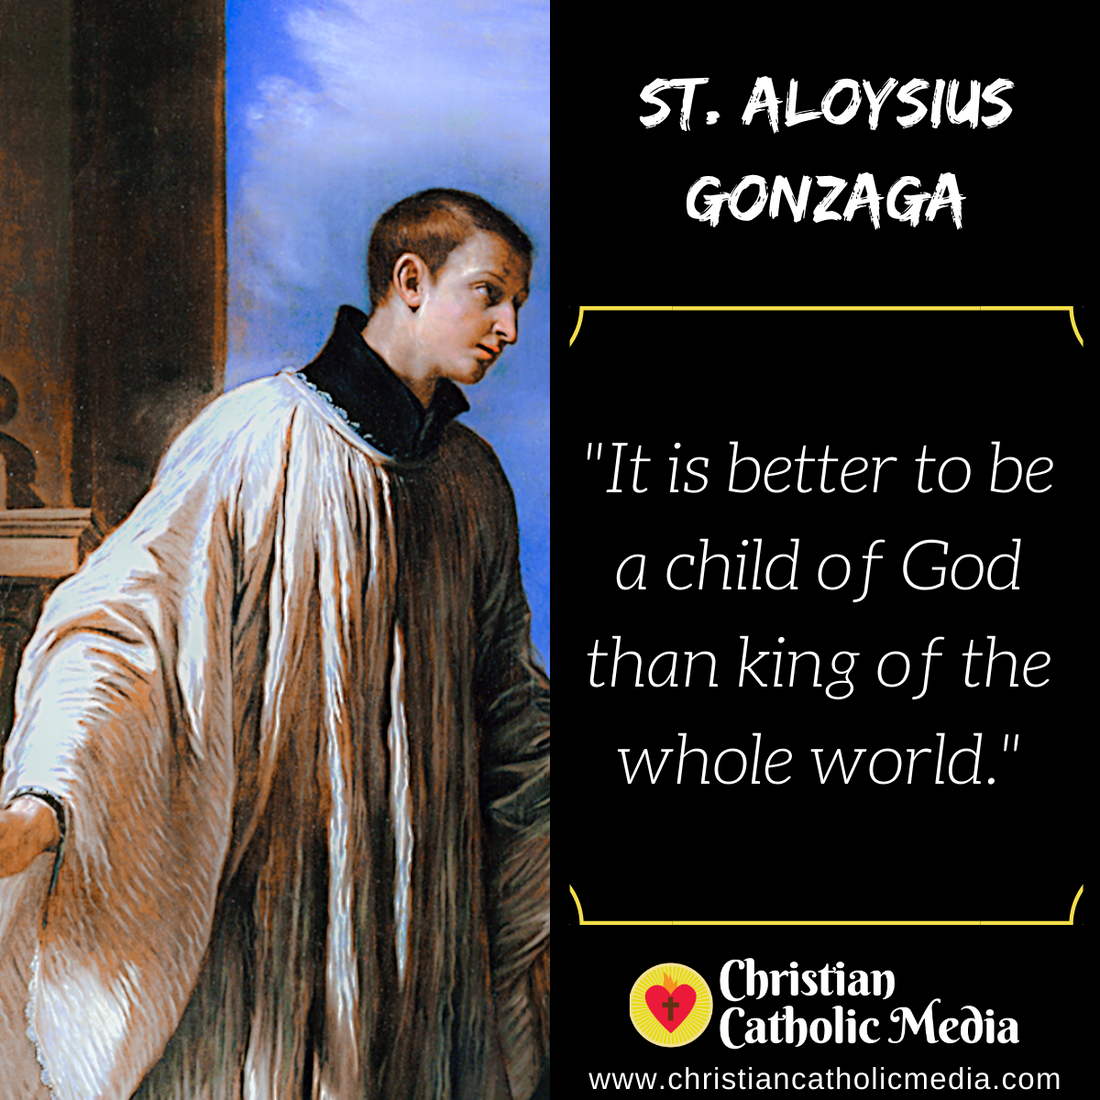 St. Aloysius Gonzaga - Tuesday June 21, 2022